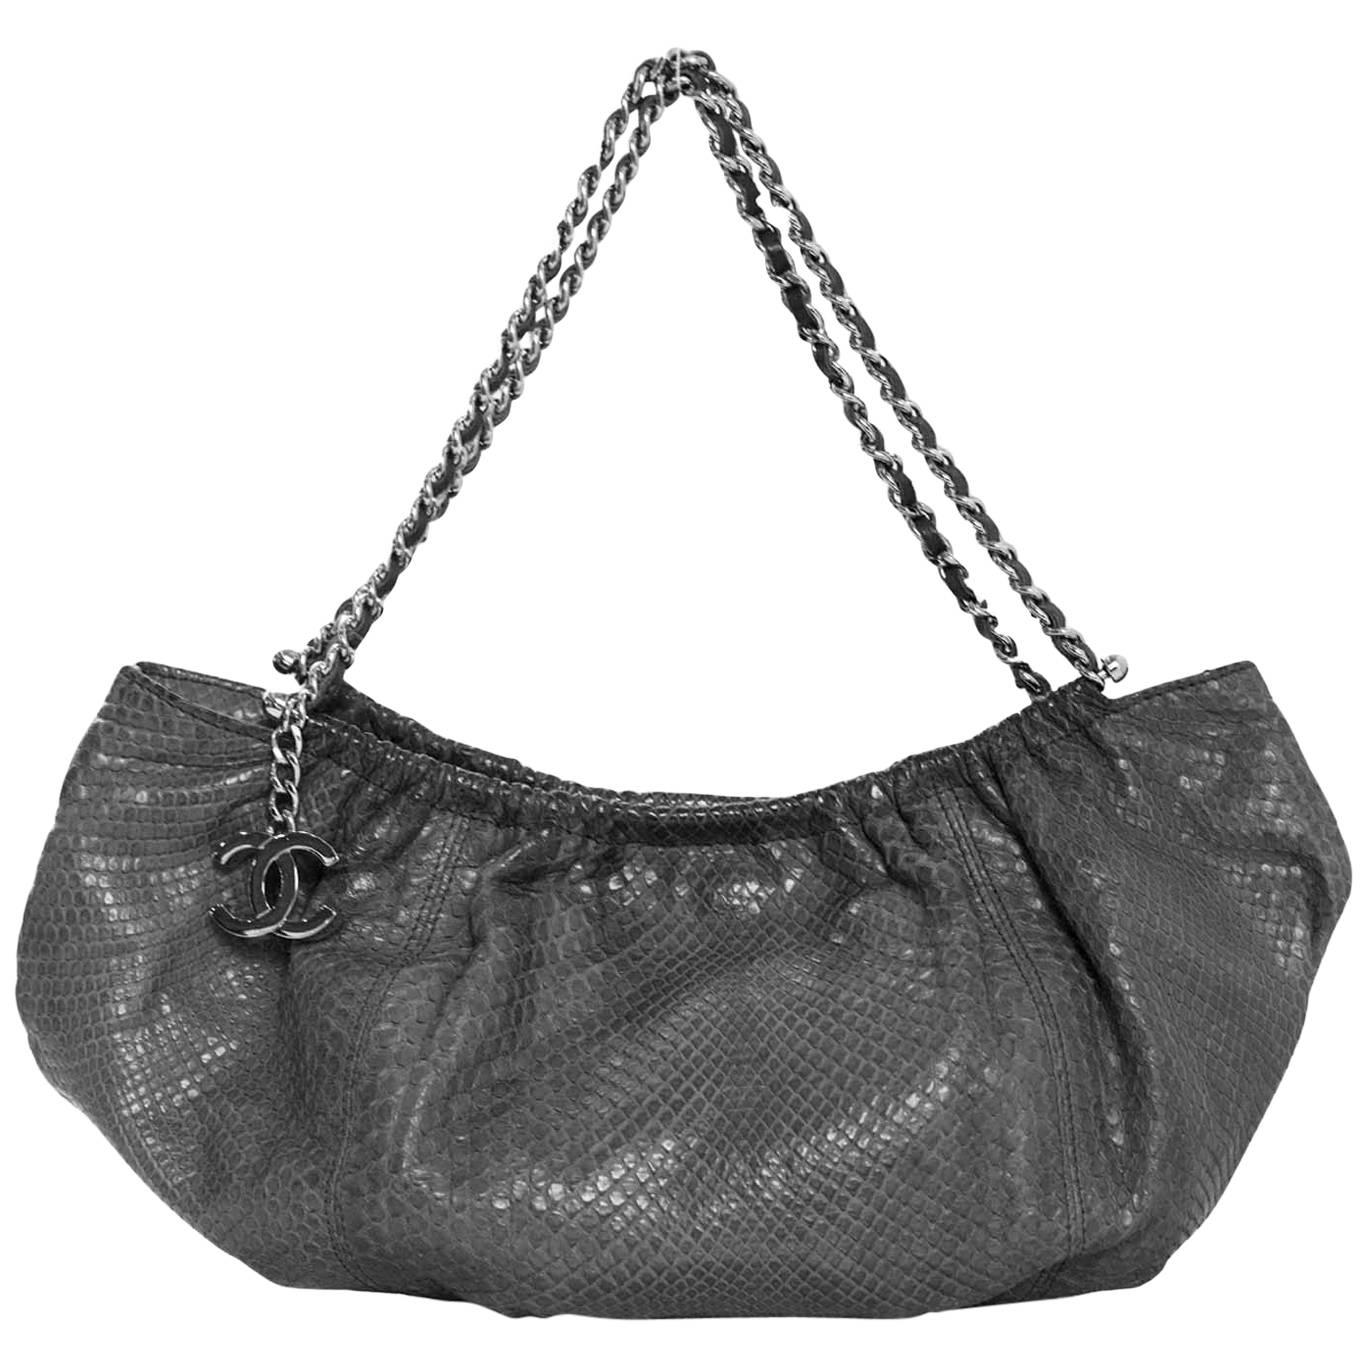 Chanel Grey Python Small Shoulder Bag with CC